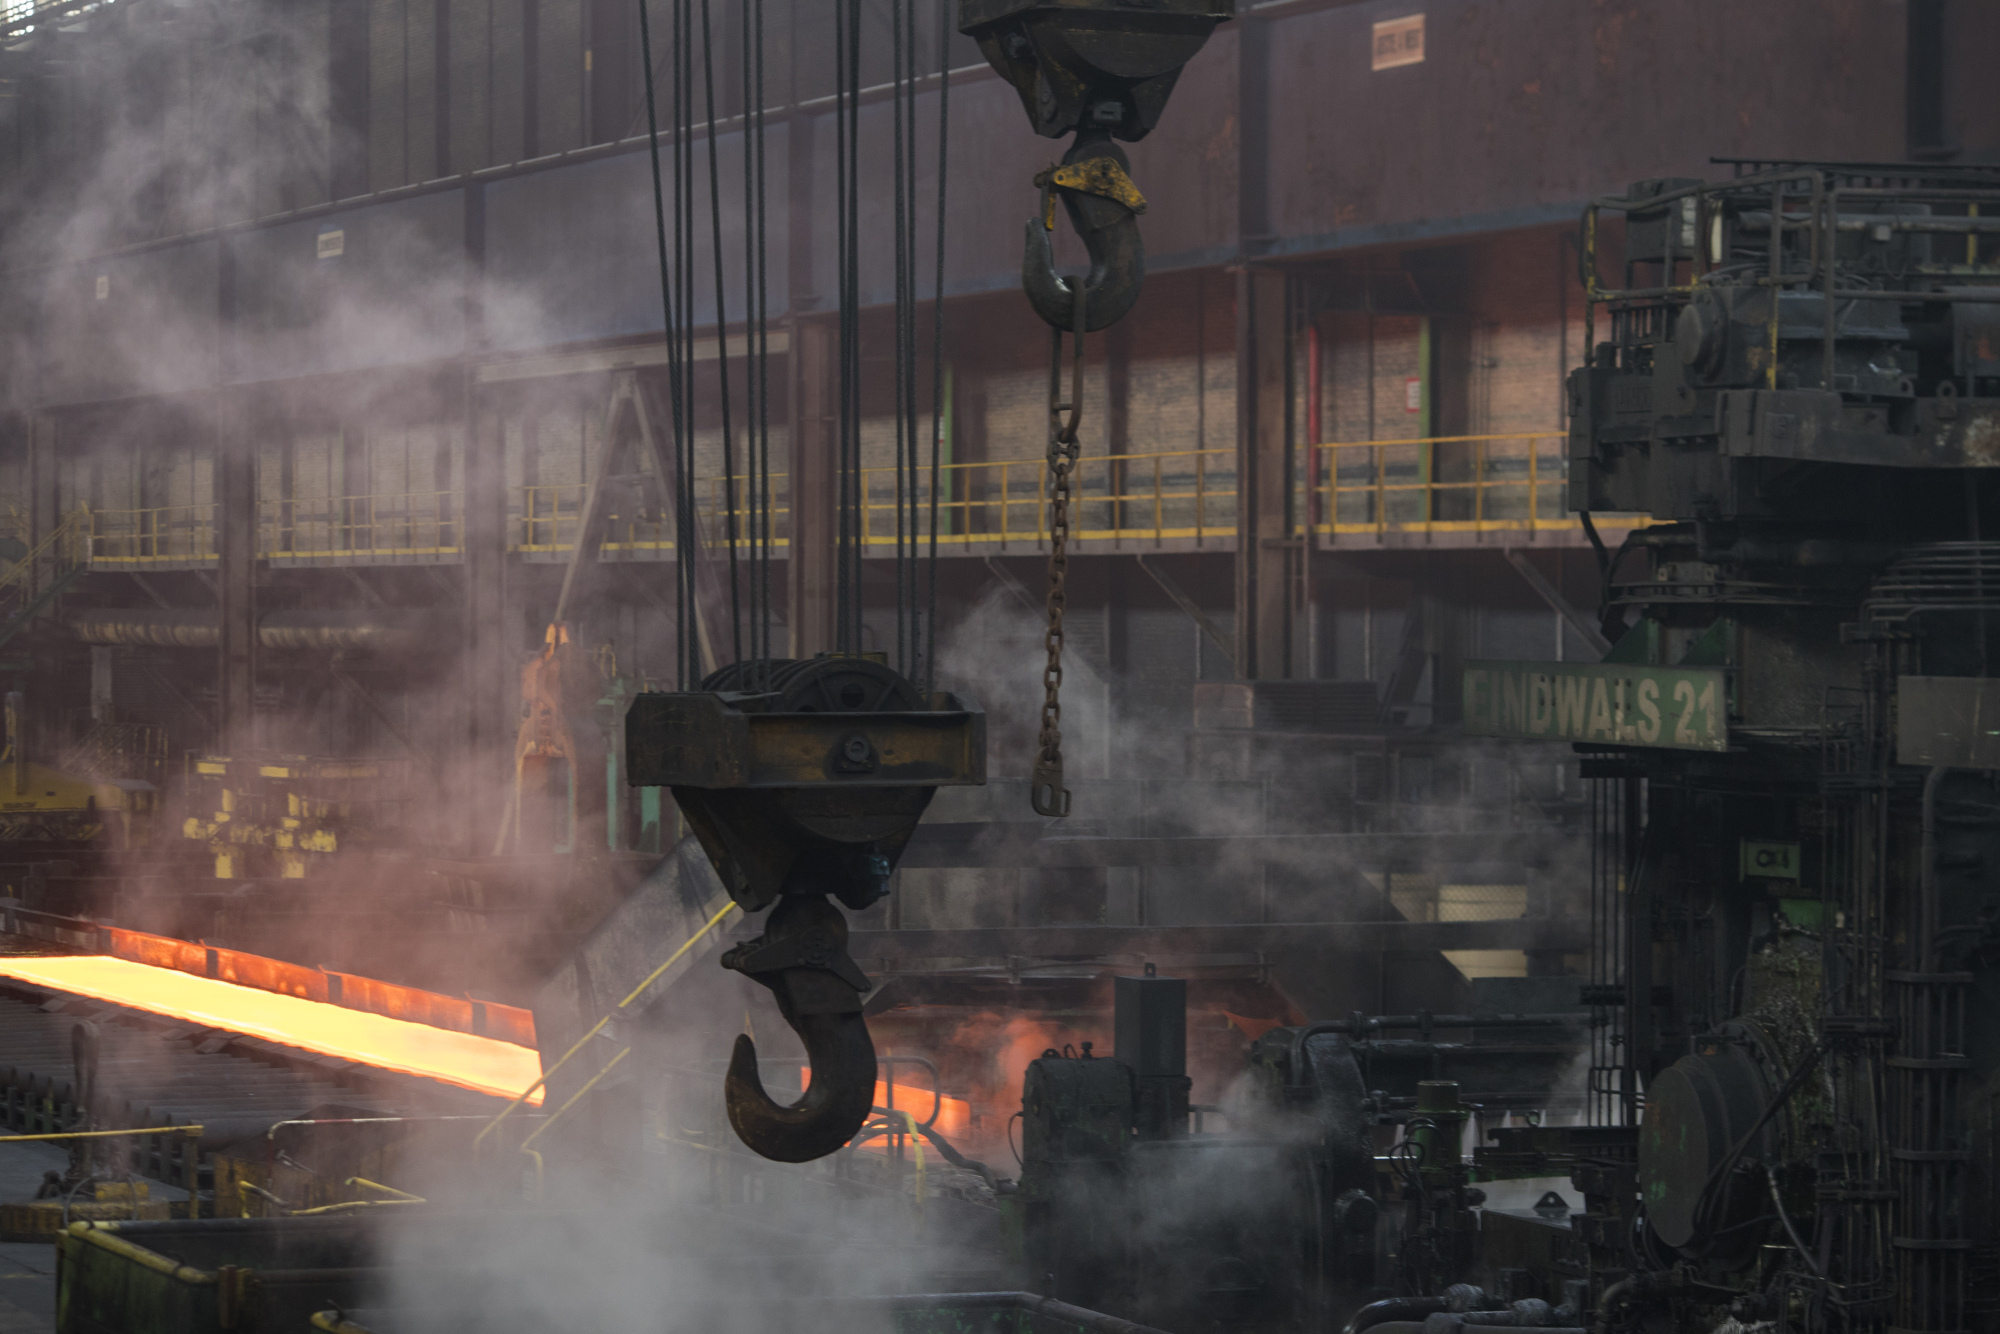 IJmuiden  Tata Steel in Europe